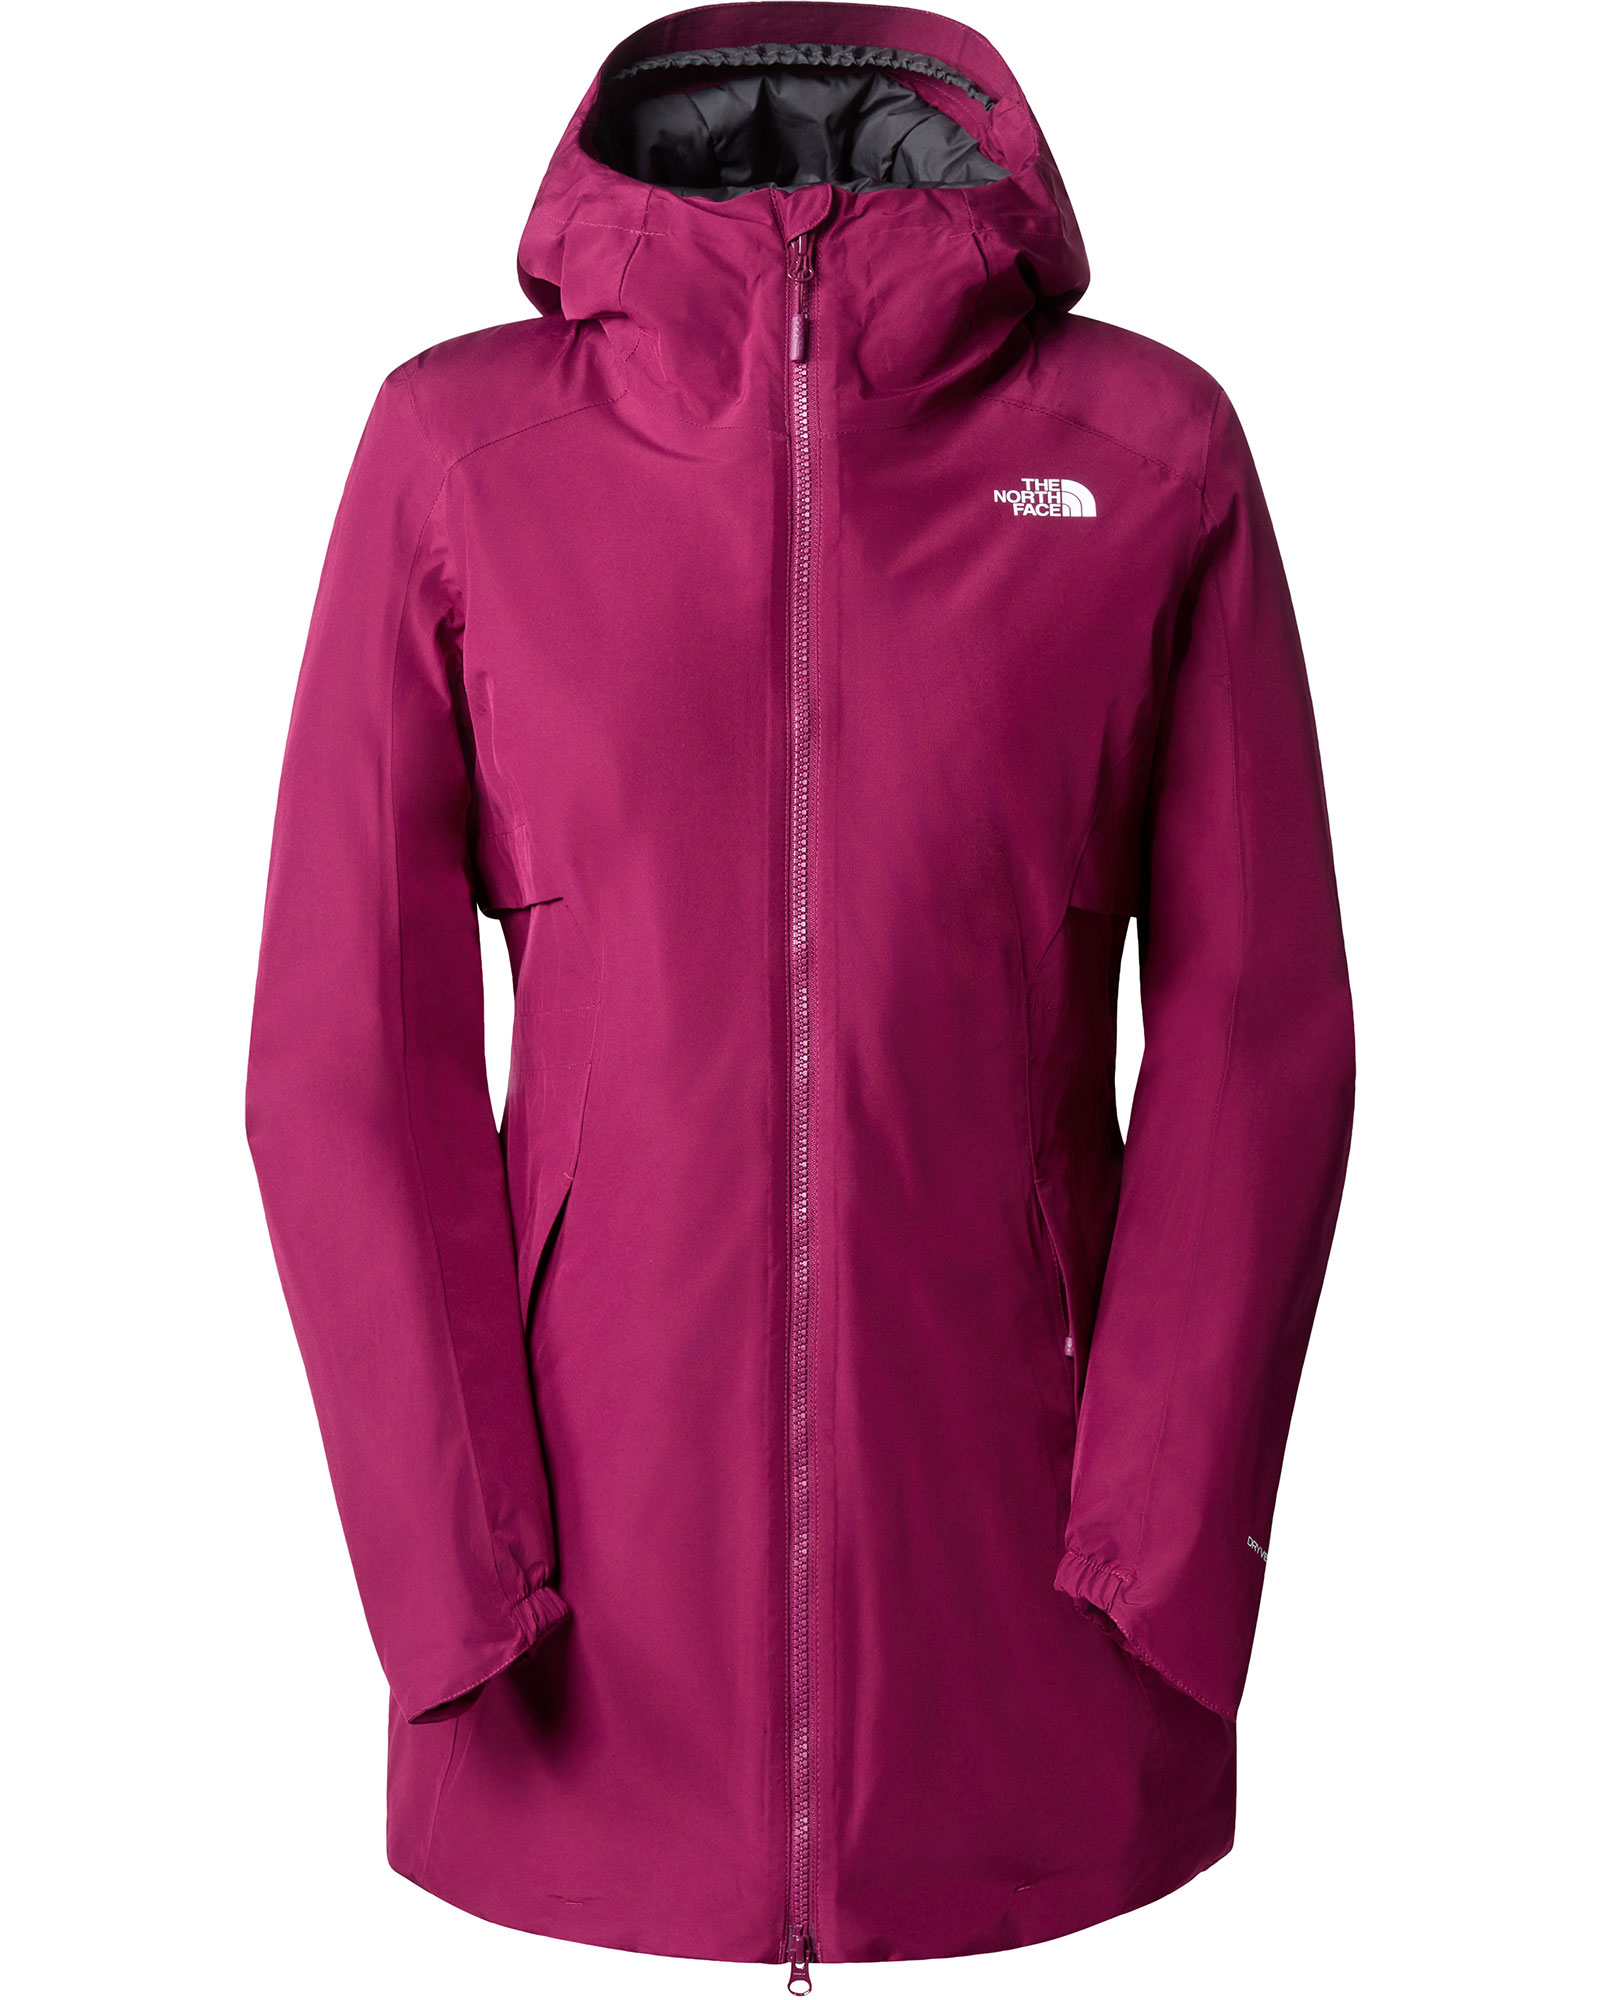 The North Face Hikesteller Women’s Insulated Parka Jacket - Boysenberry-Asphalt Grey S